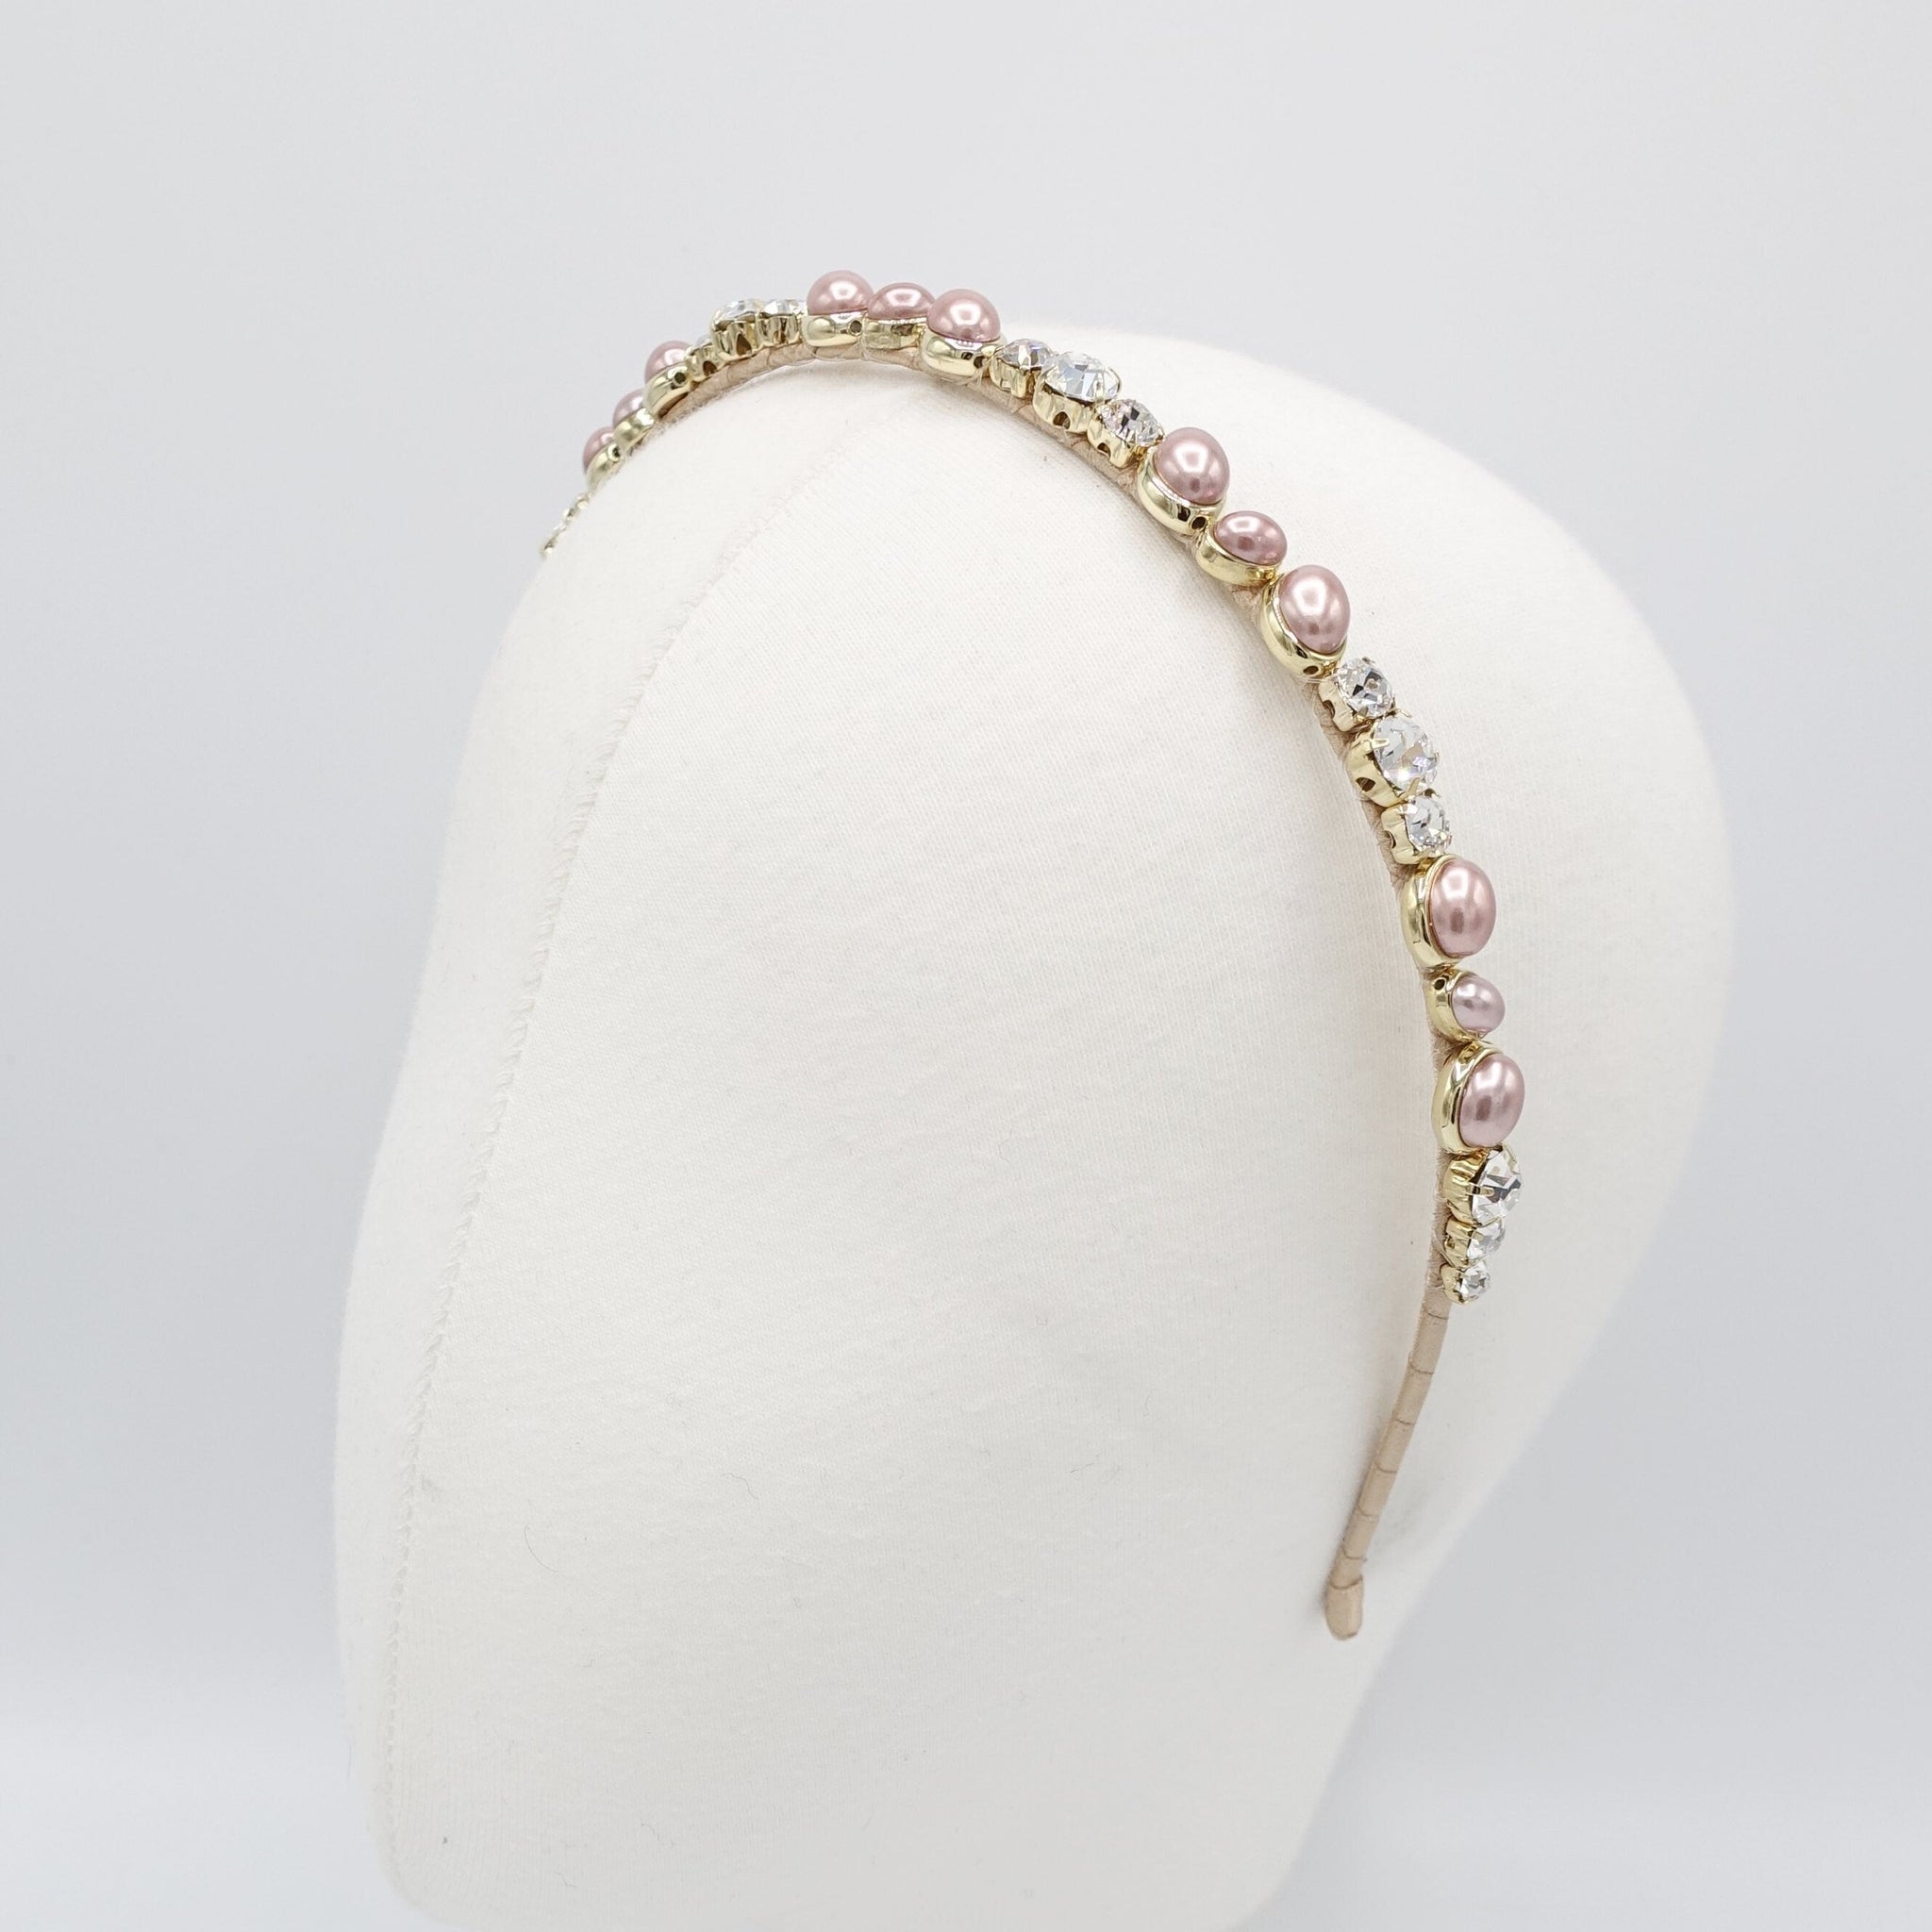 veryshine.com pearl rhinestone embellished thin headband